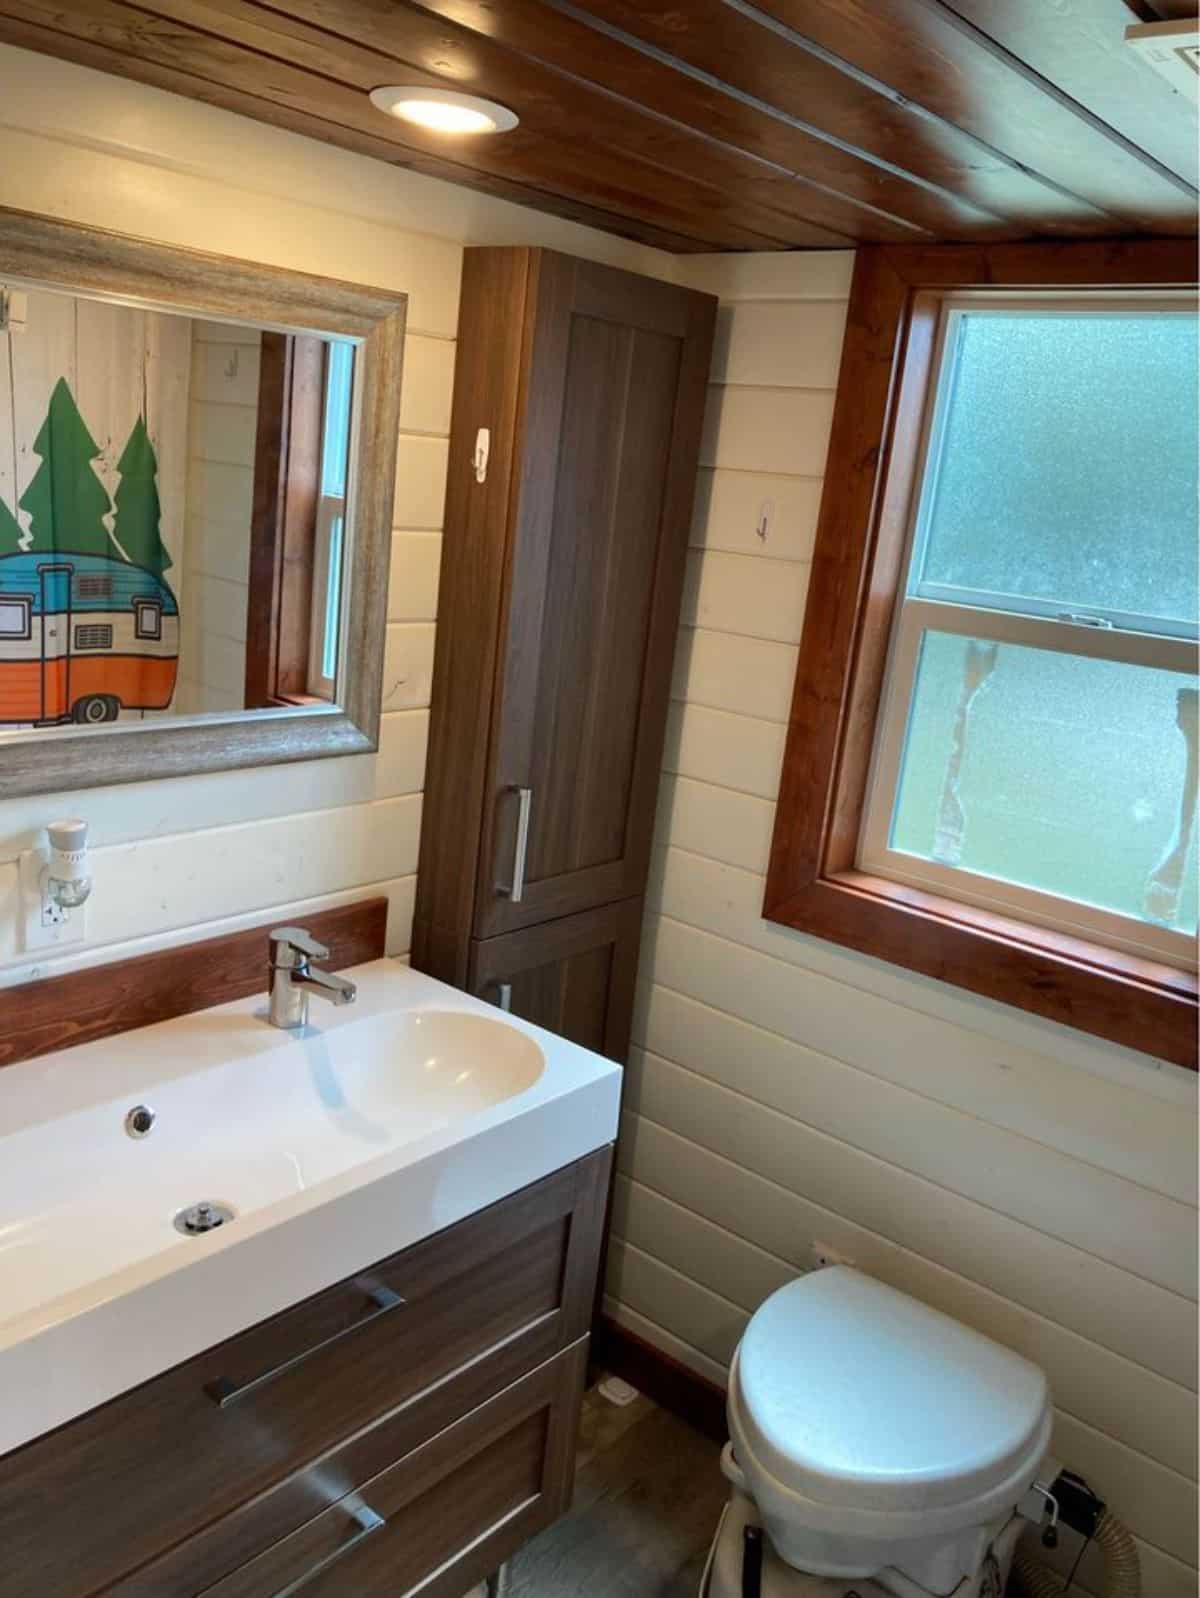 bathroom of custom made tiny home has all the standard fittings